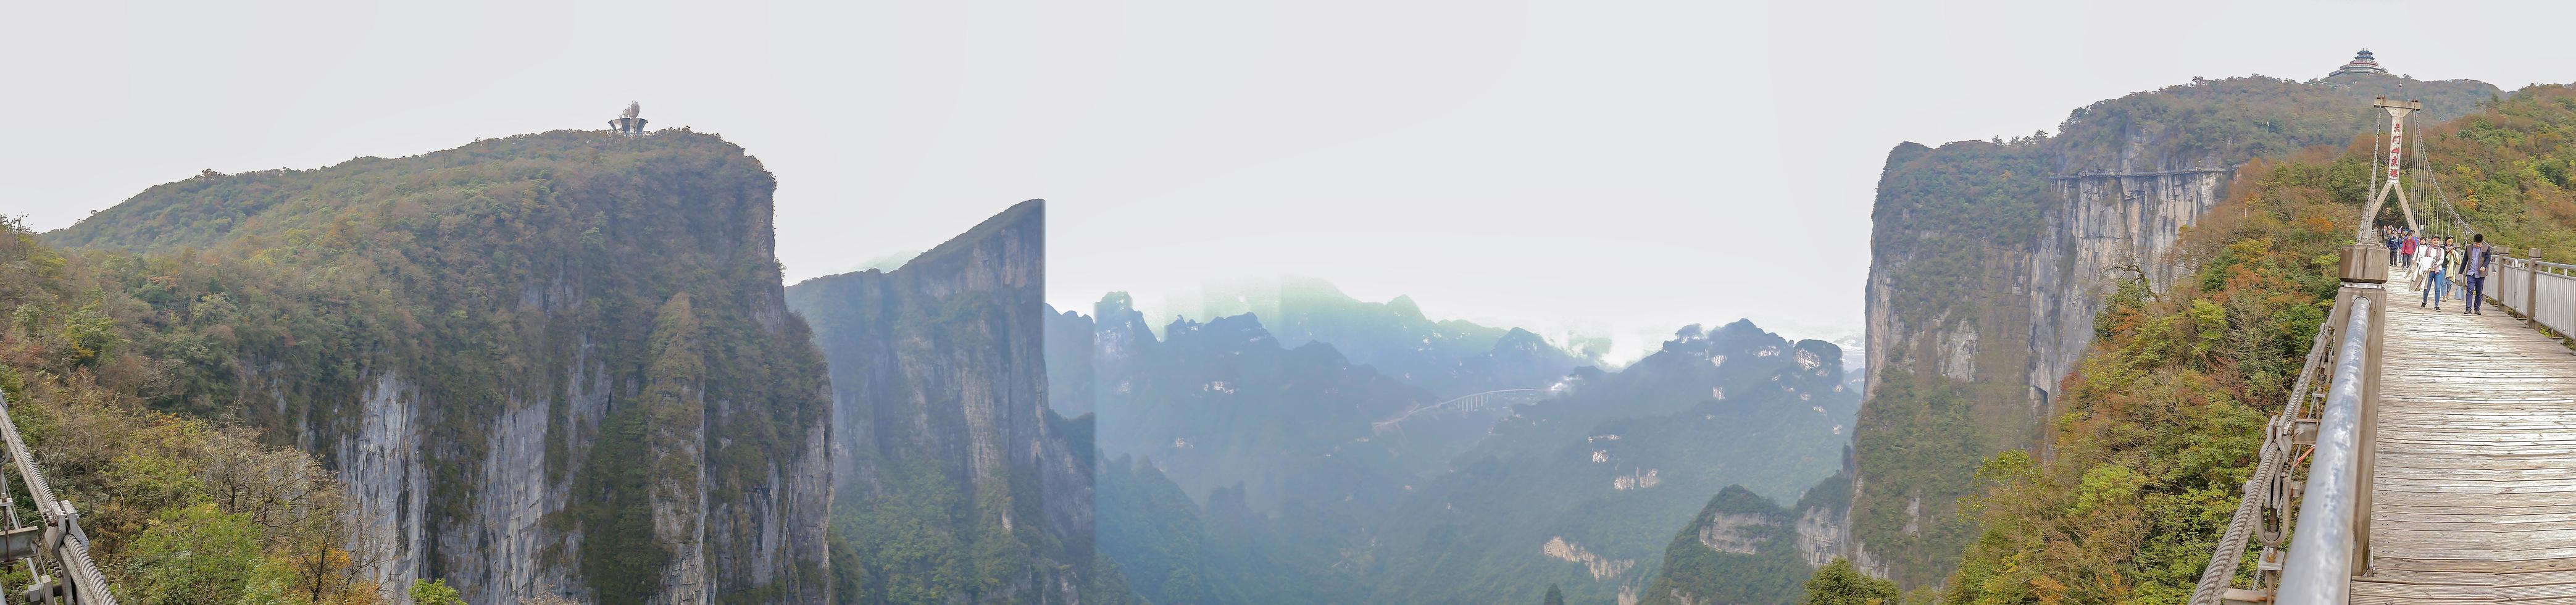 zhangjiajie.china - 15 oktober 2018.obekant turist gående på suspension bro korsa de berg på tianmen berg zhangjiajie china.tianmen bergen resa destination av zhangjiajie Kina foto